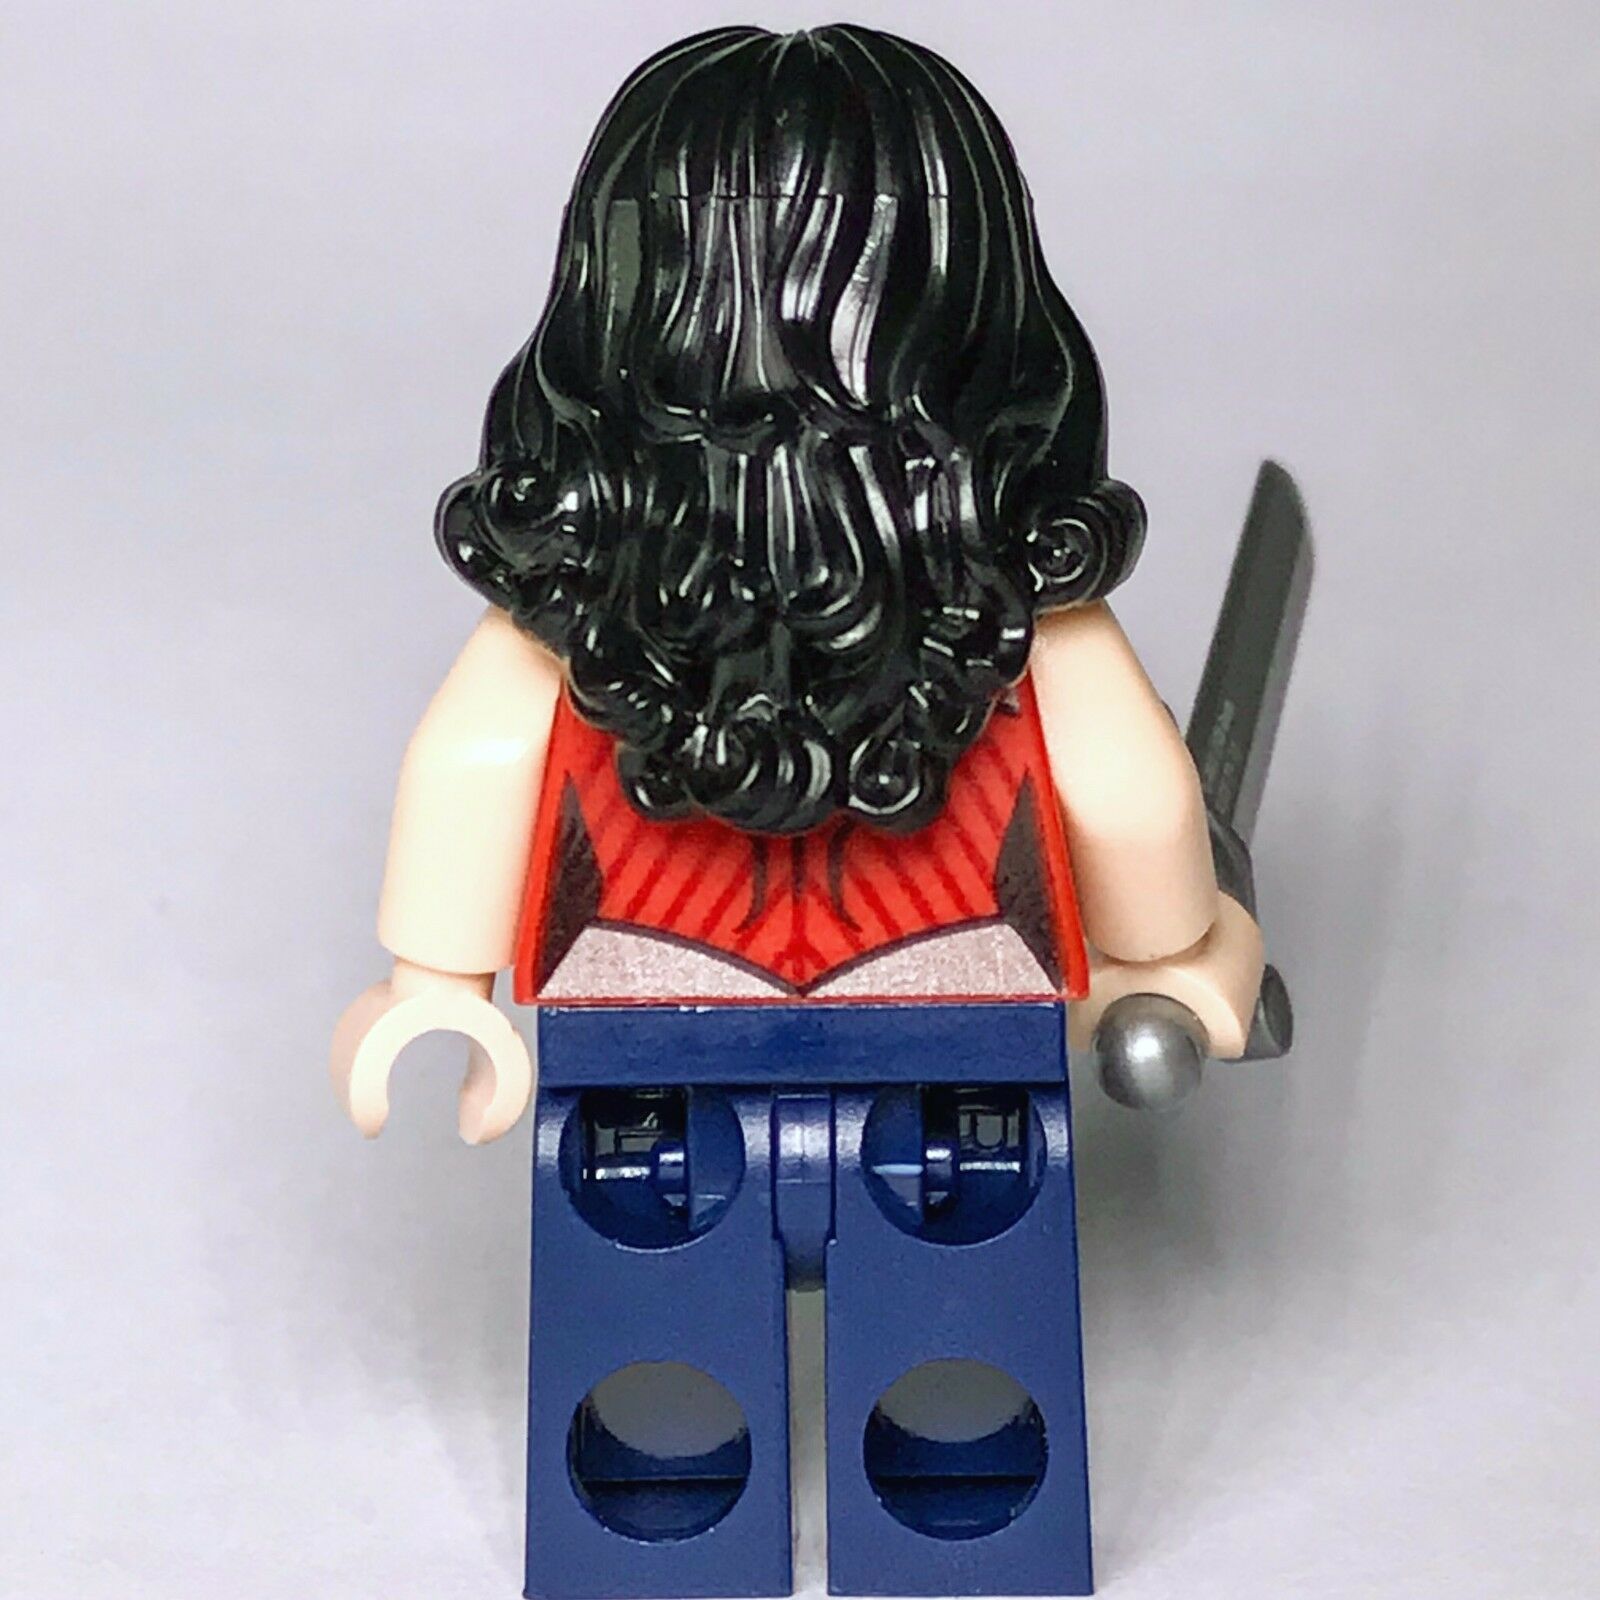 DC Super Heroes LEGO Wonder Woman Justice League Minifigure from set 76026 - Bricks & Figures